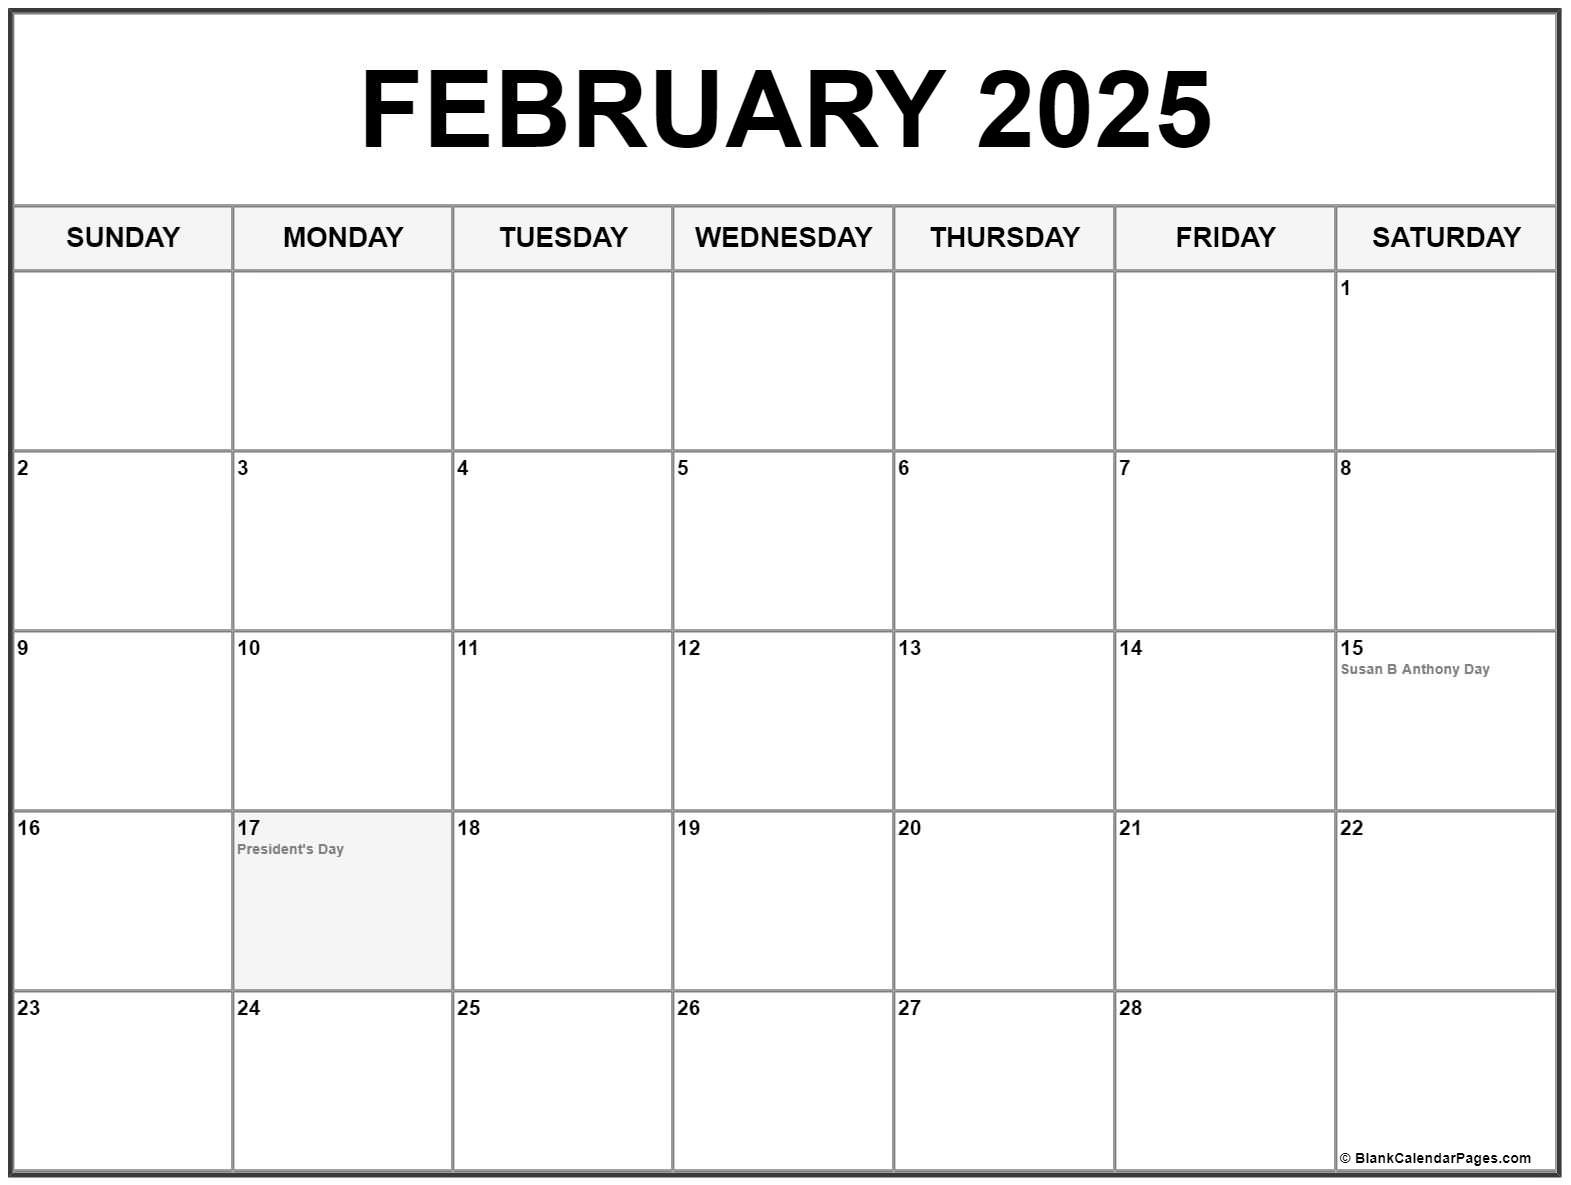 Fed Calendar 2025 